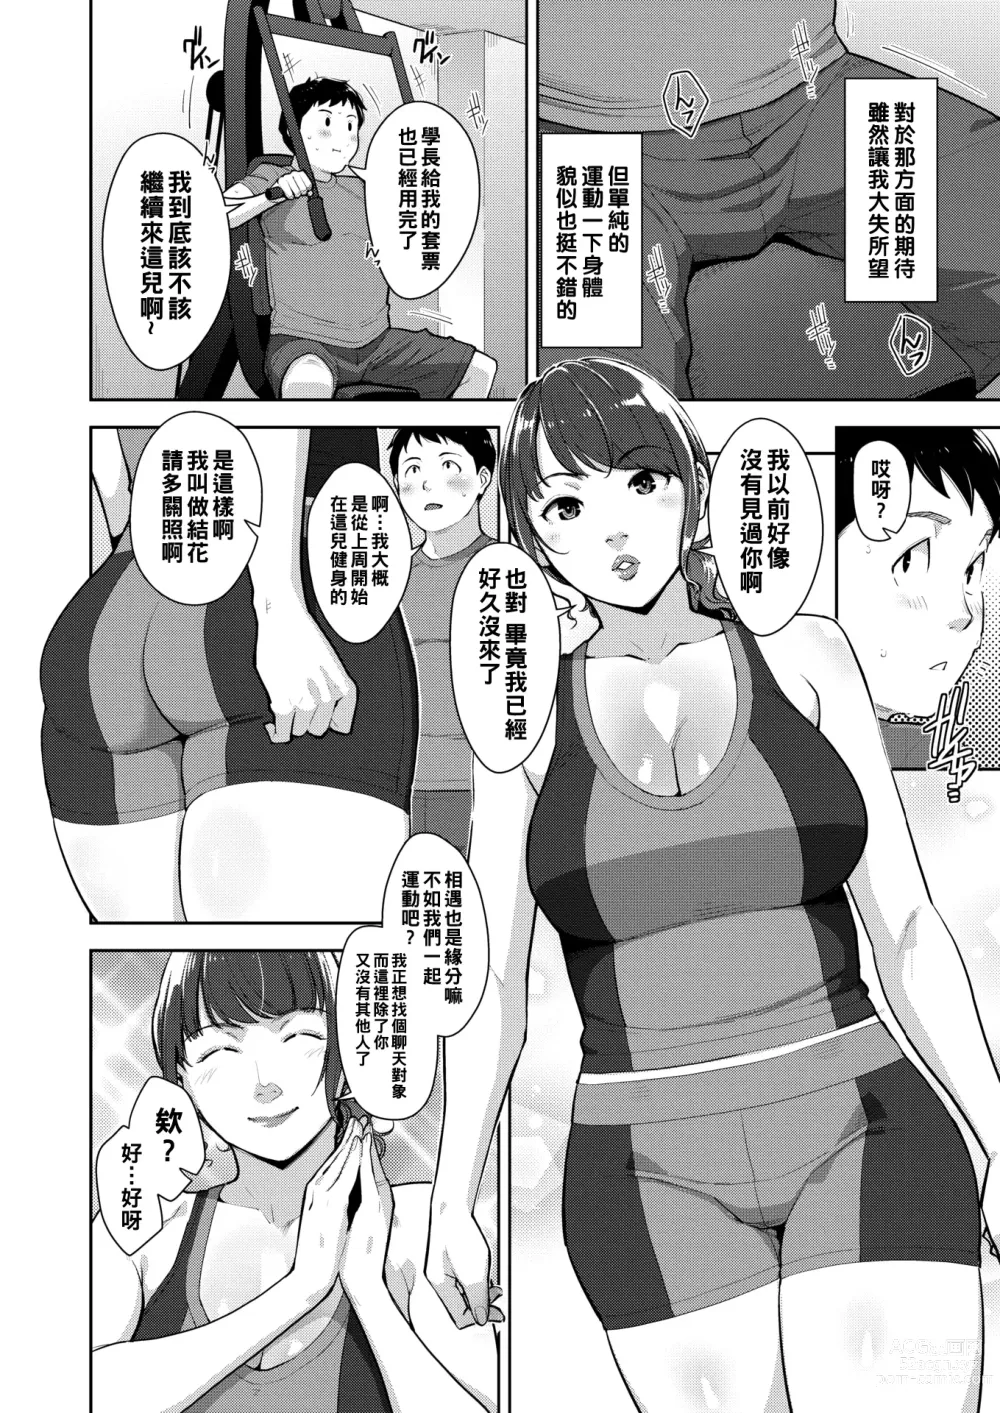 Page 2 of manga PHYSICAROOM